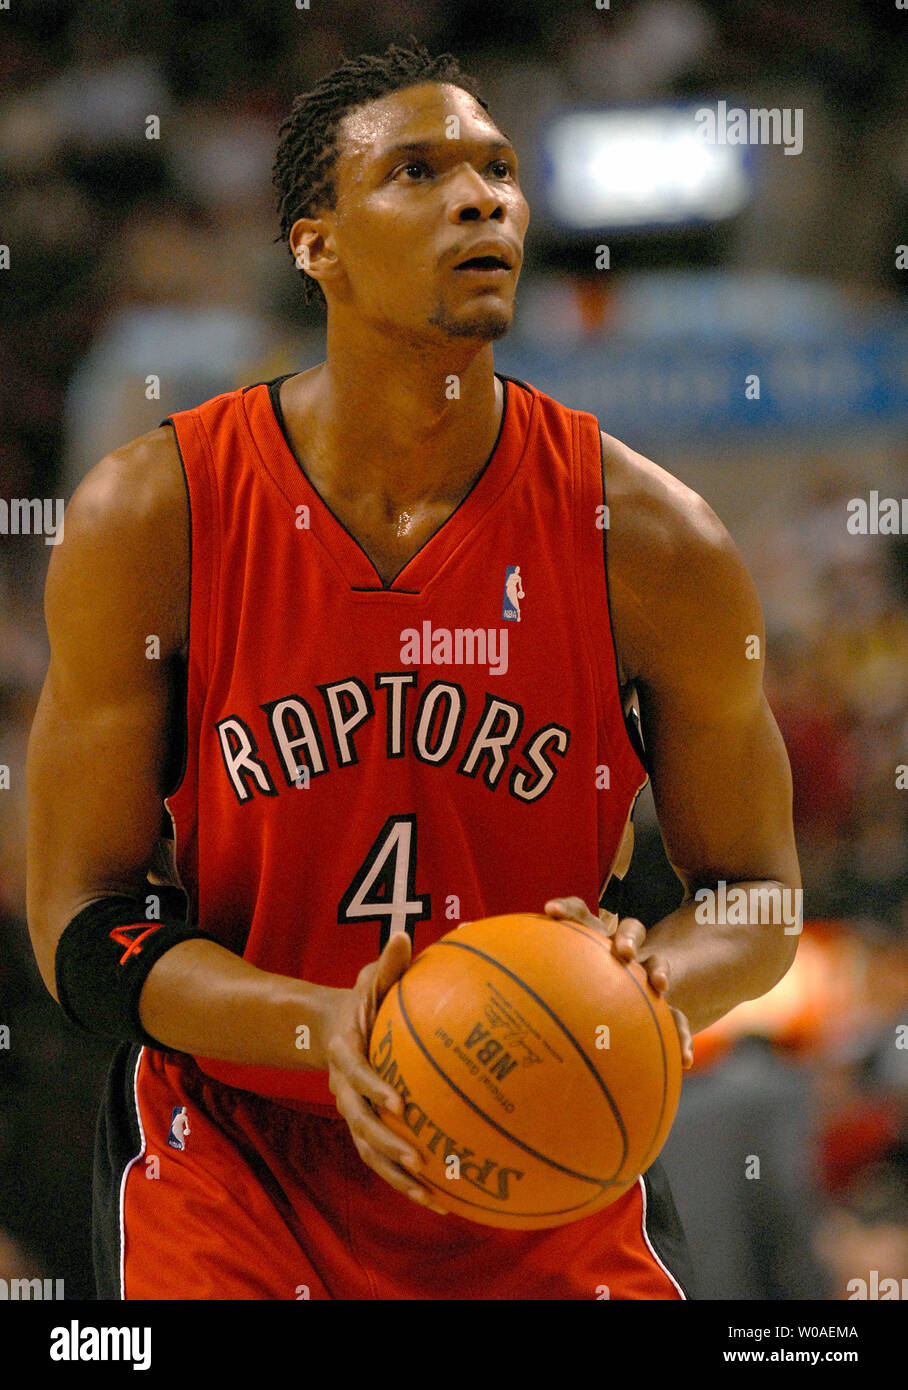 Toronto Raptors: Is Chris Bosh destined for the Basketball Hall of Fame?